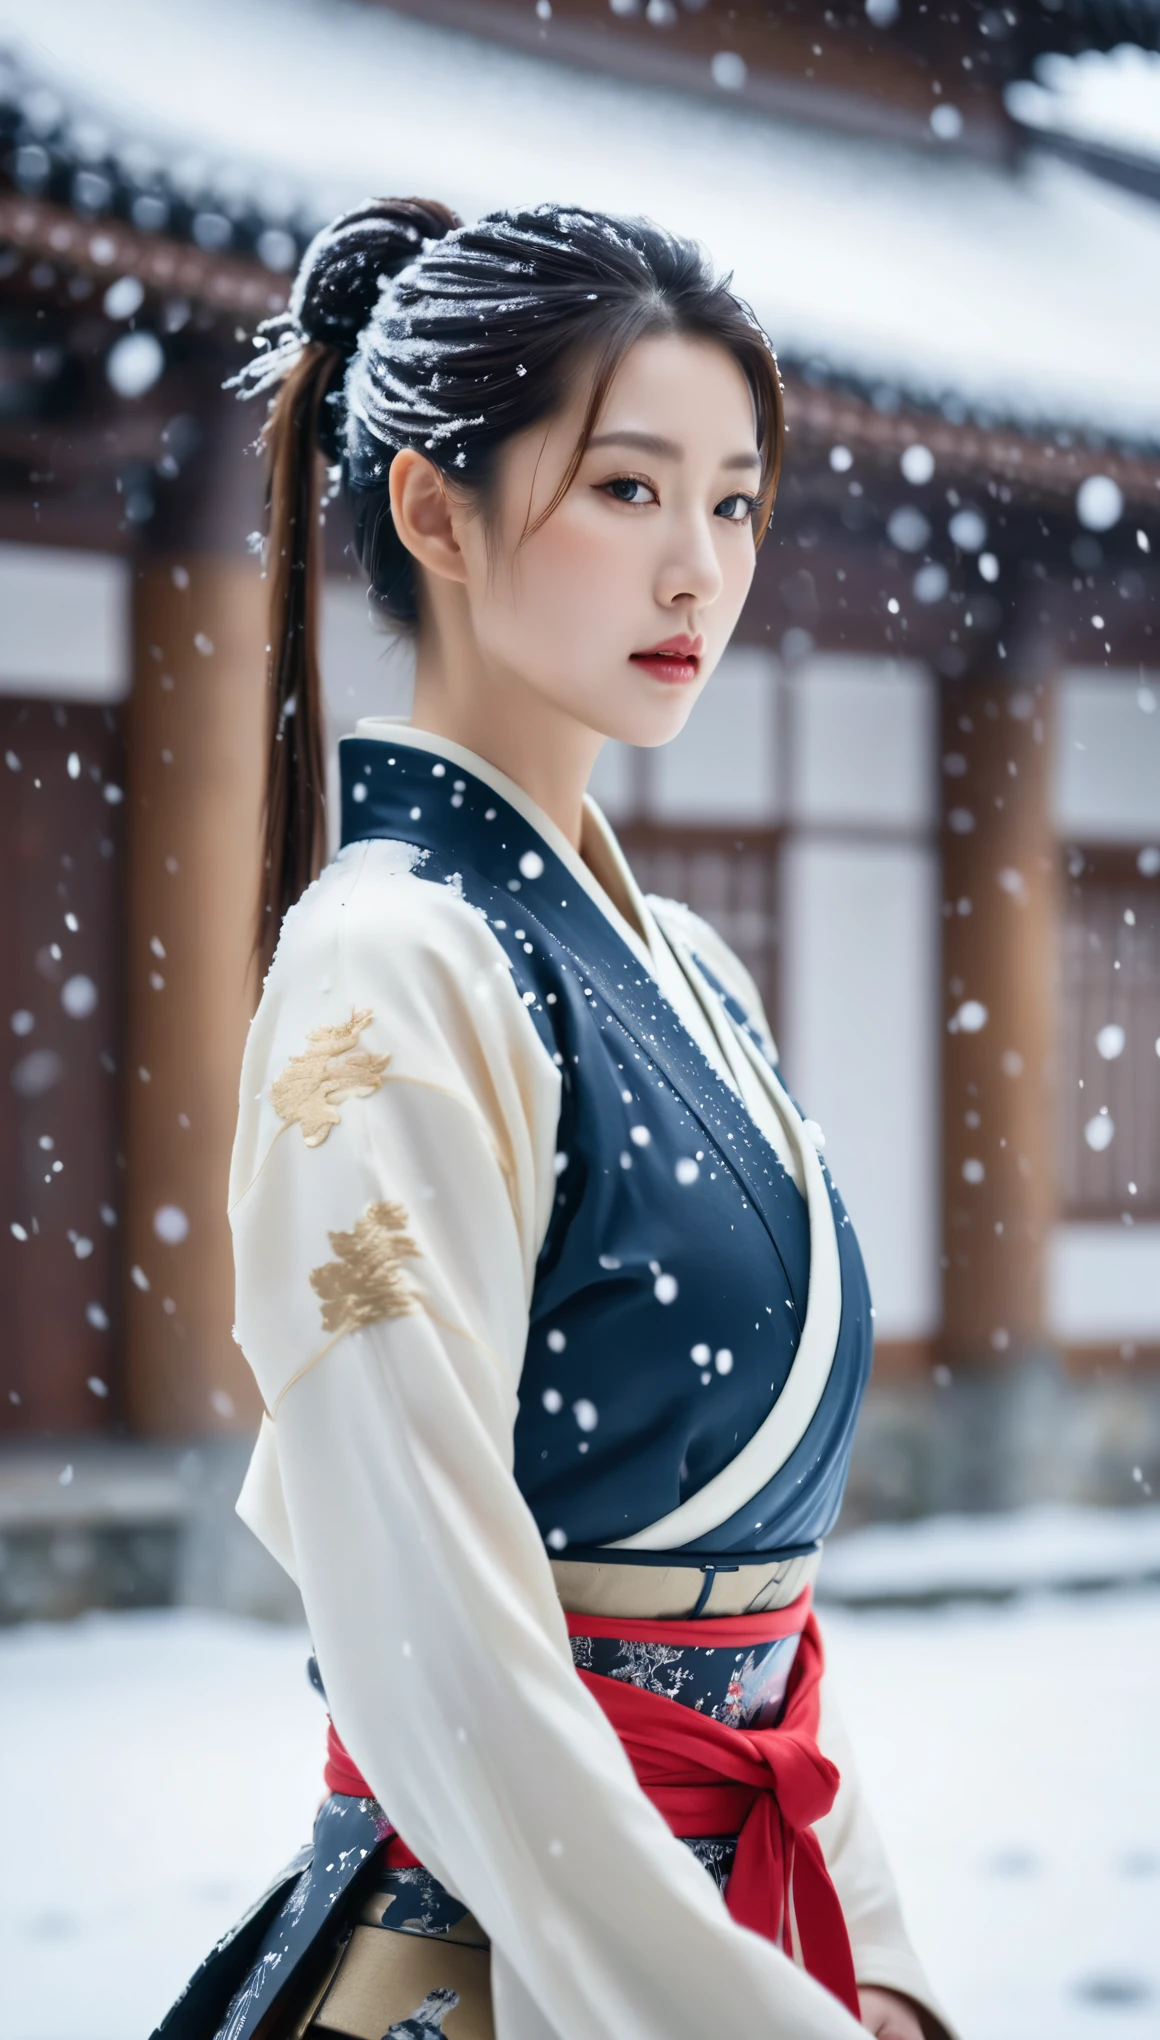 primer plano de una hermosa mujer coreana, tamaño de senos de 34 pulgadas, cola de caballo, usando armadura samurái, en el castillo japonés, nieve cayendo, fondo bokeh, uhd 